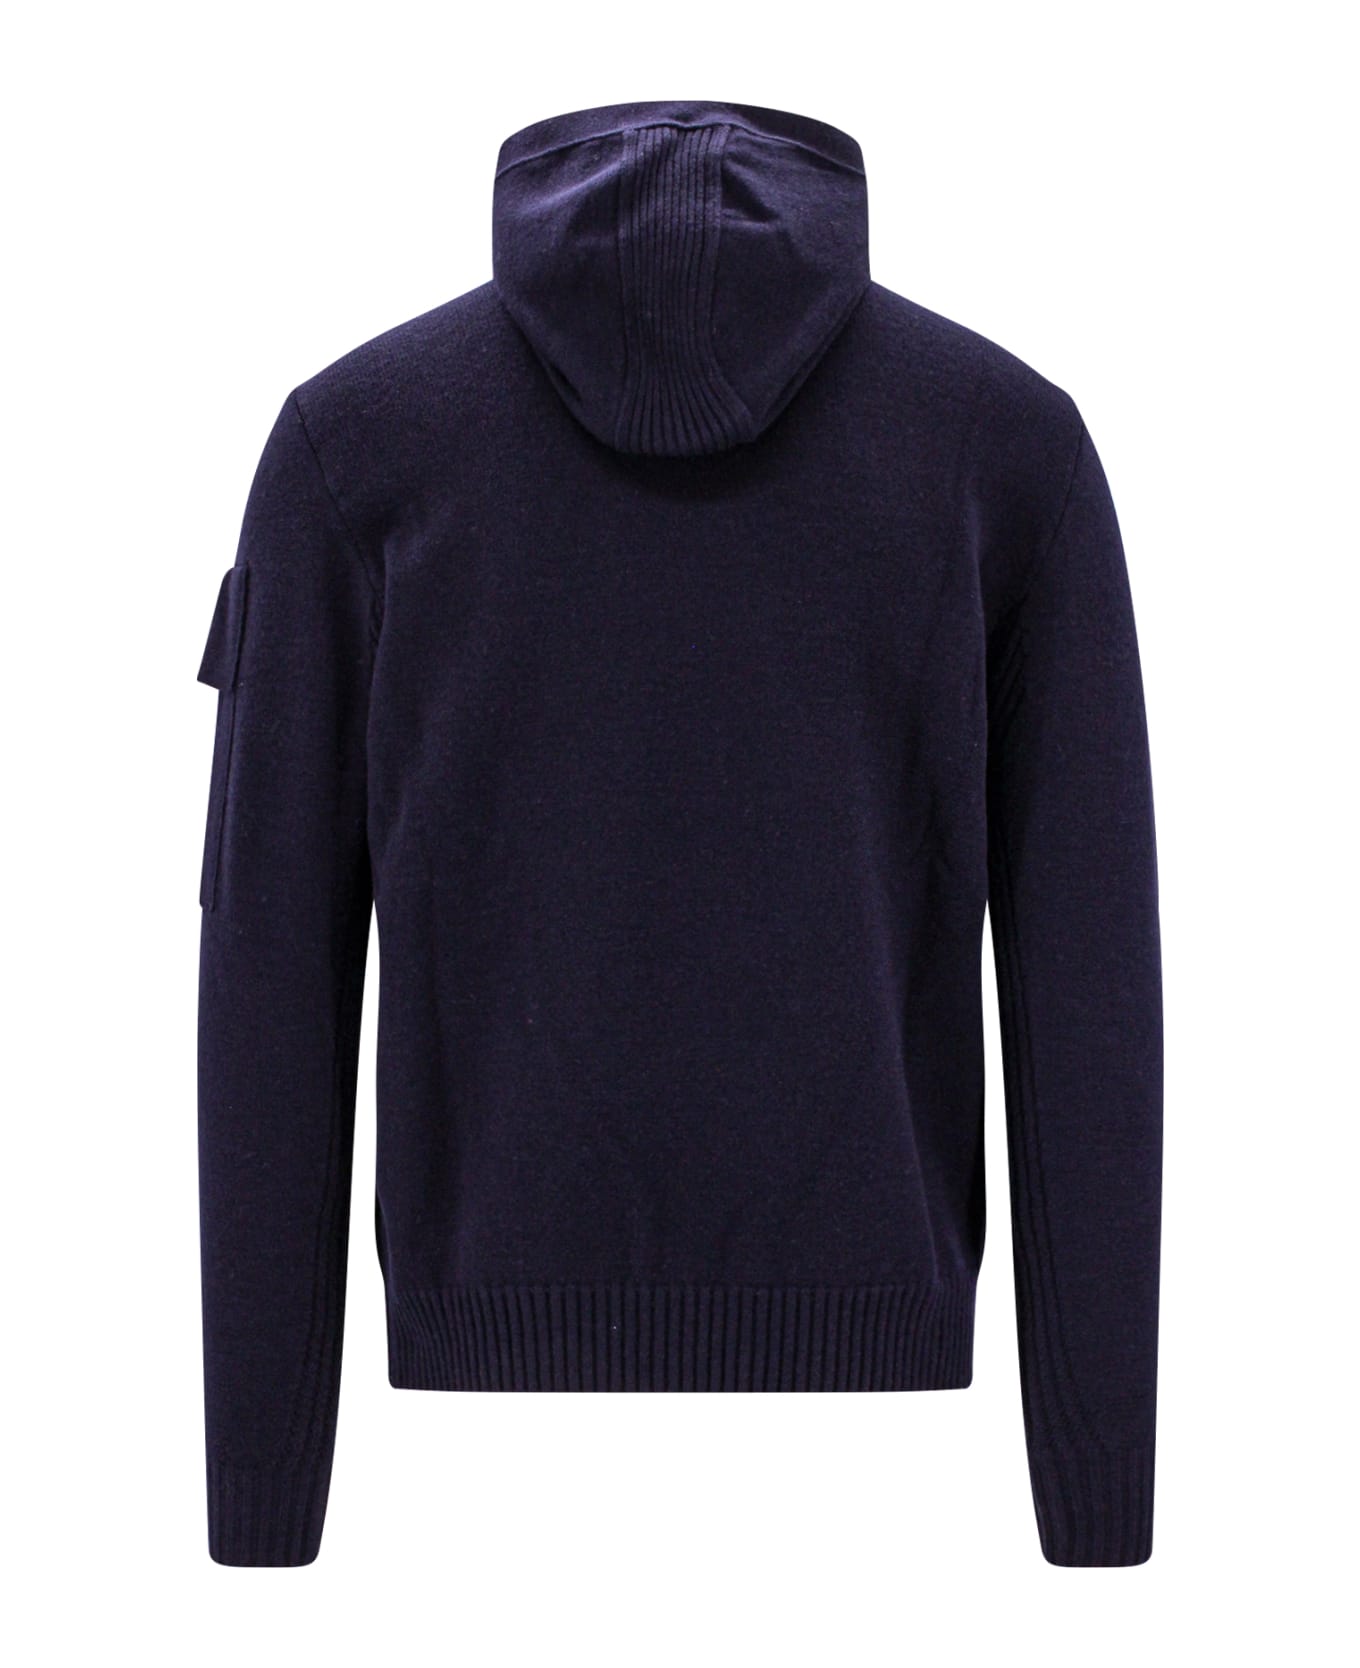 C.P. Company Sweater - Blue ニットウェア